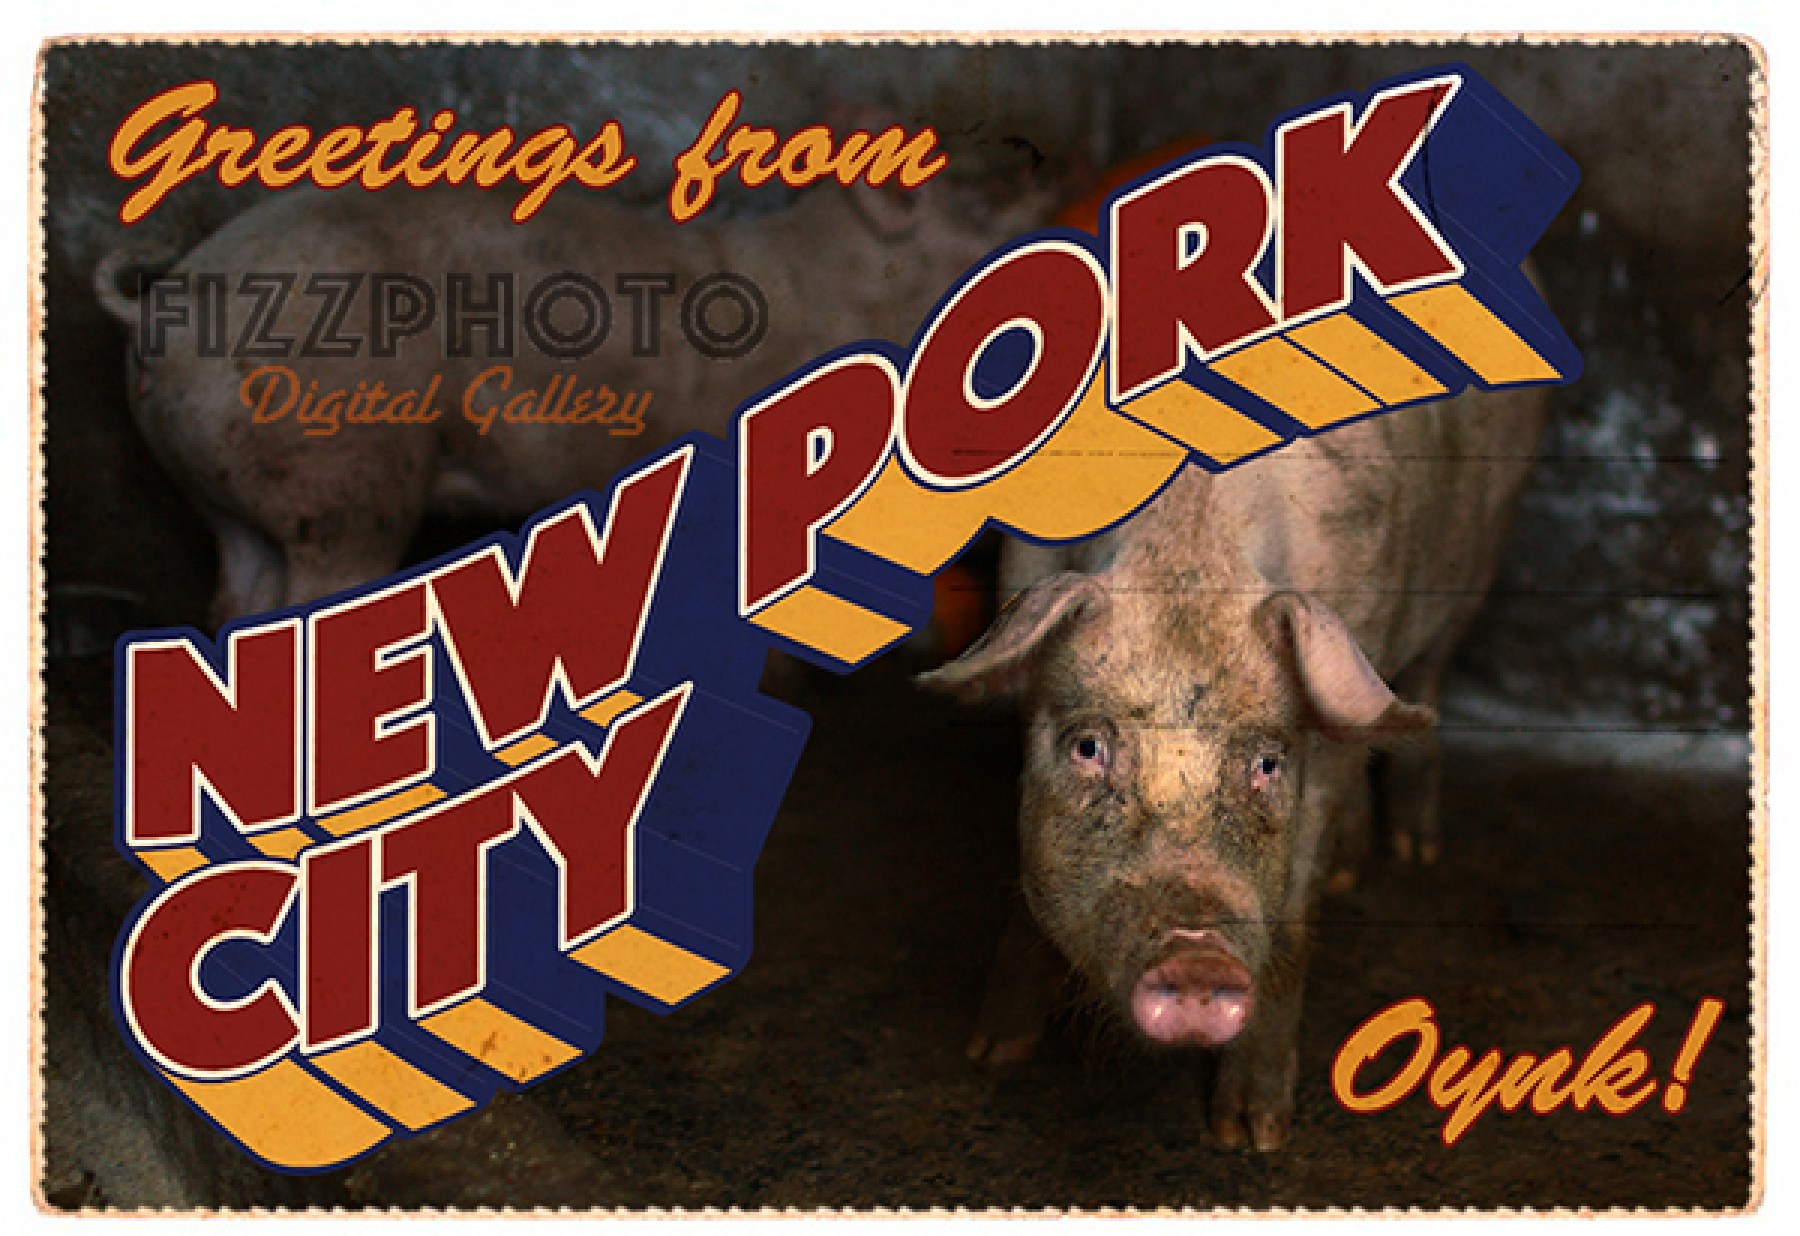 New Pork City-2